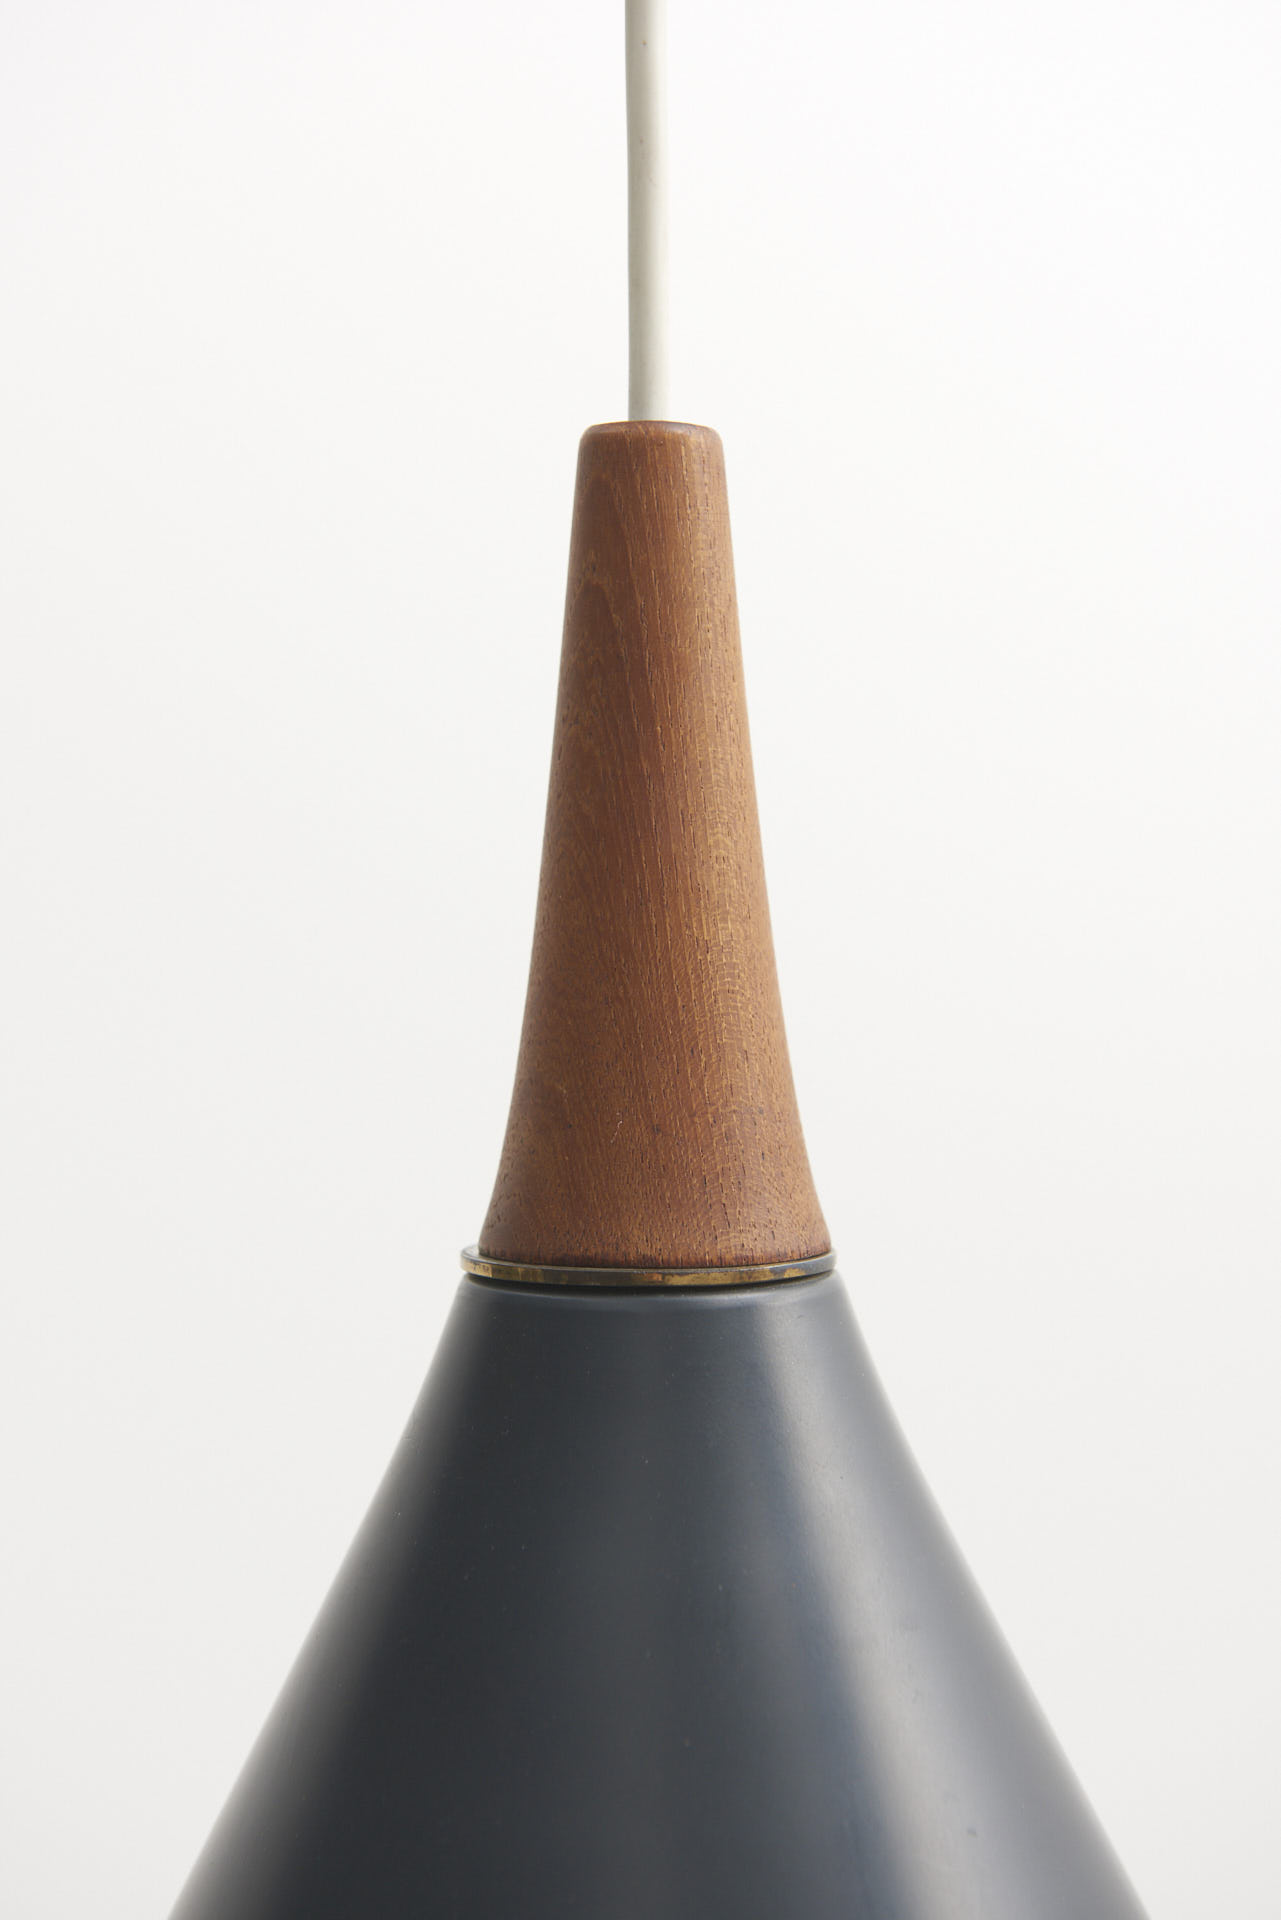 modestfurniture-vintage-2838-pendant-lamp-perforated-steel-holm-sorensen-style03